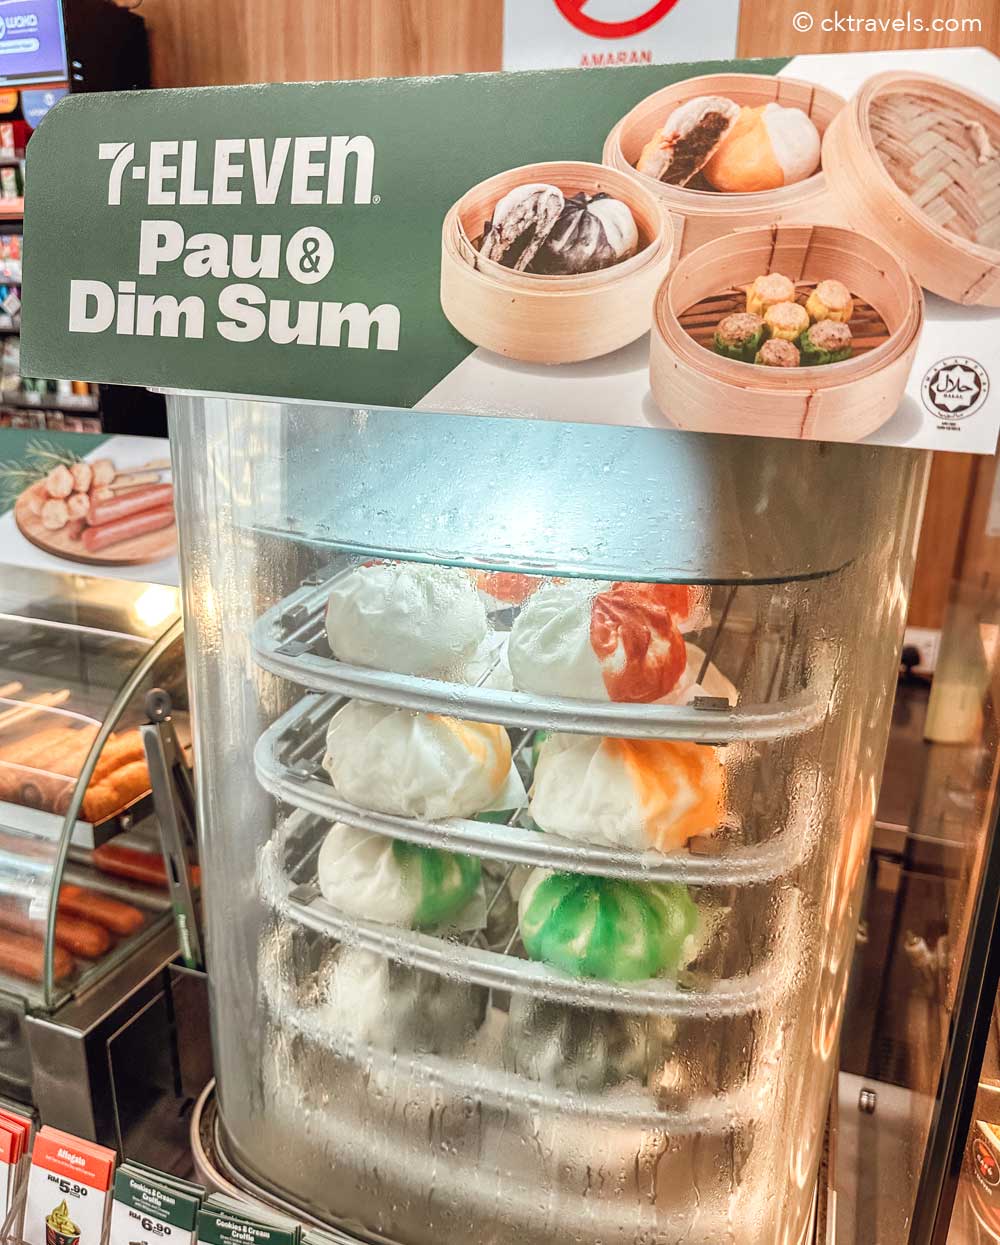 Malaysia 7-Eleven Stores - pau and dim sum